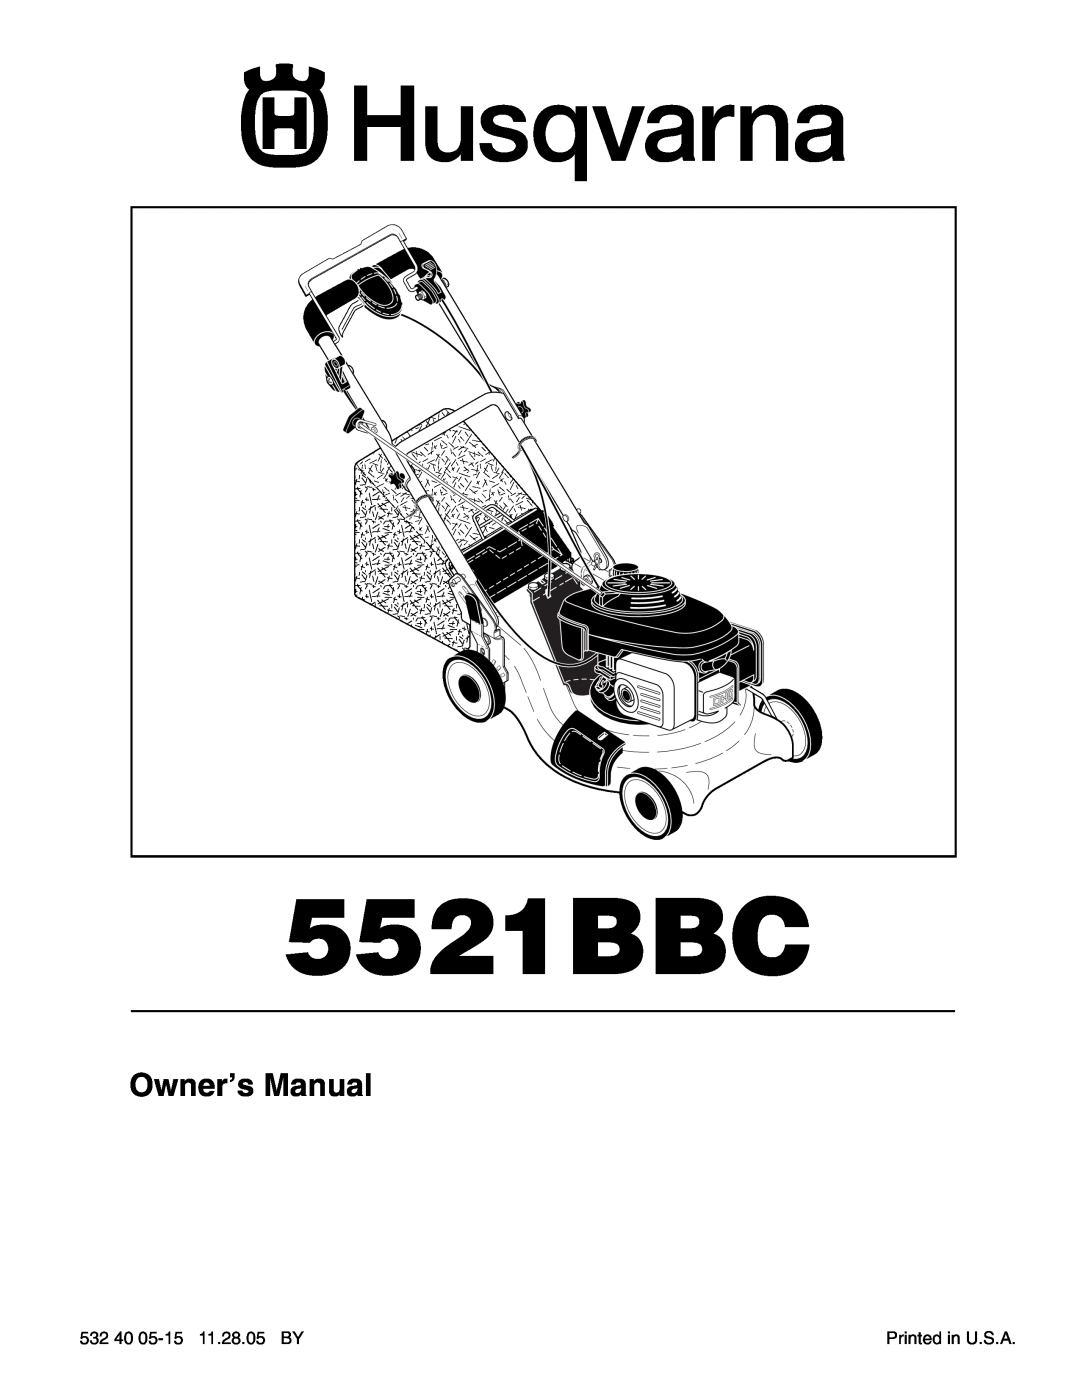 Husqvarna 5521BBC owner manual Owner’s Manual 